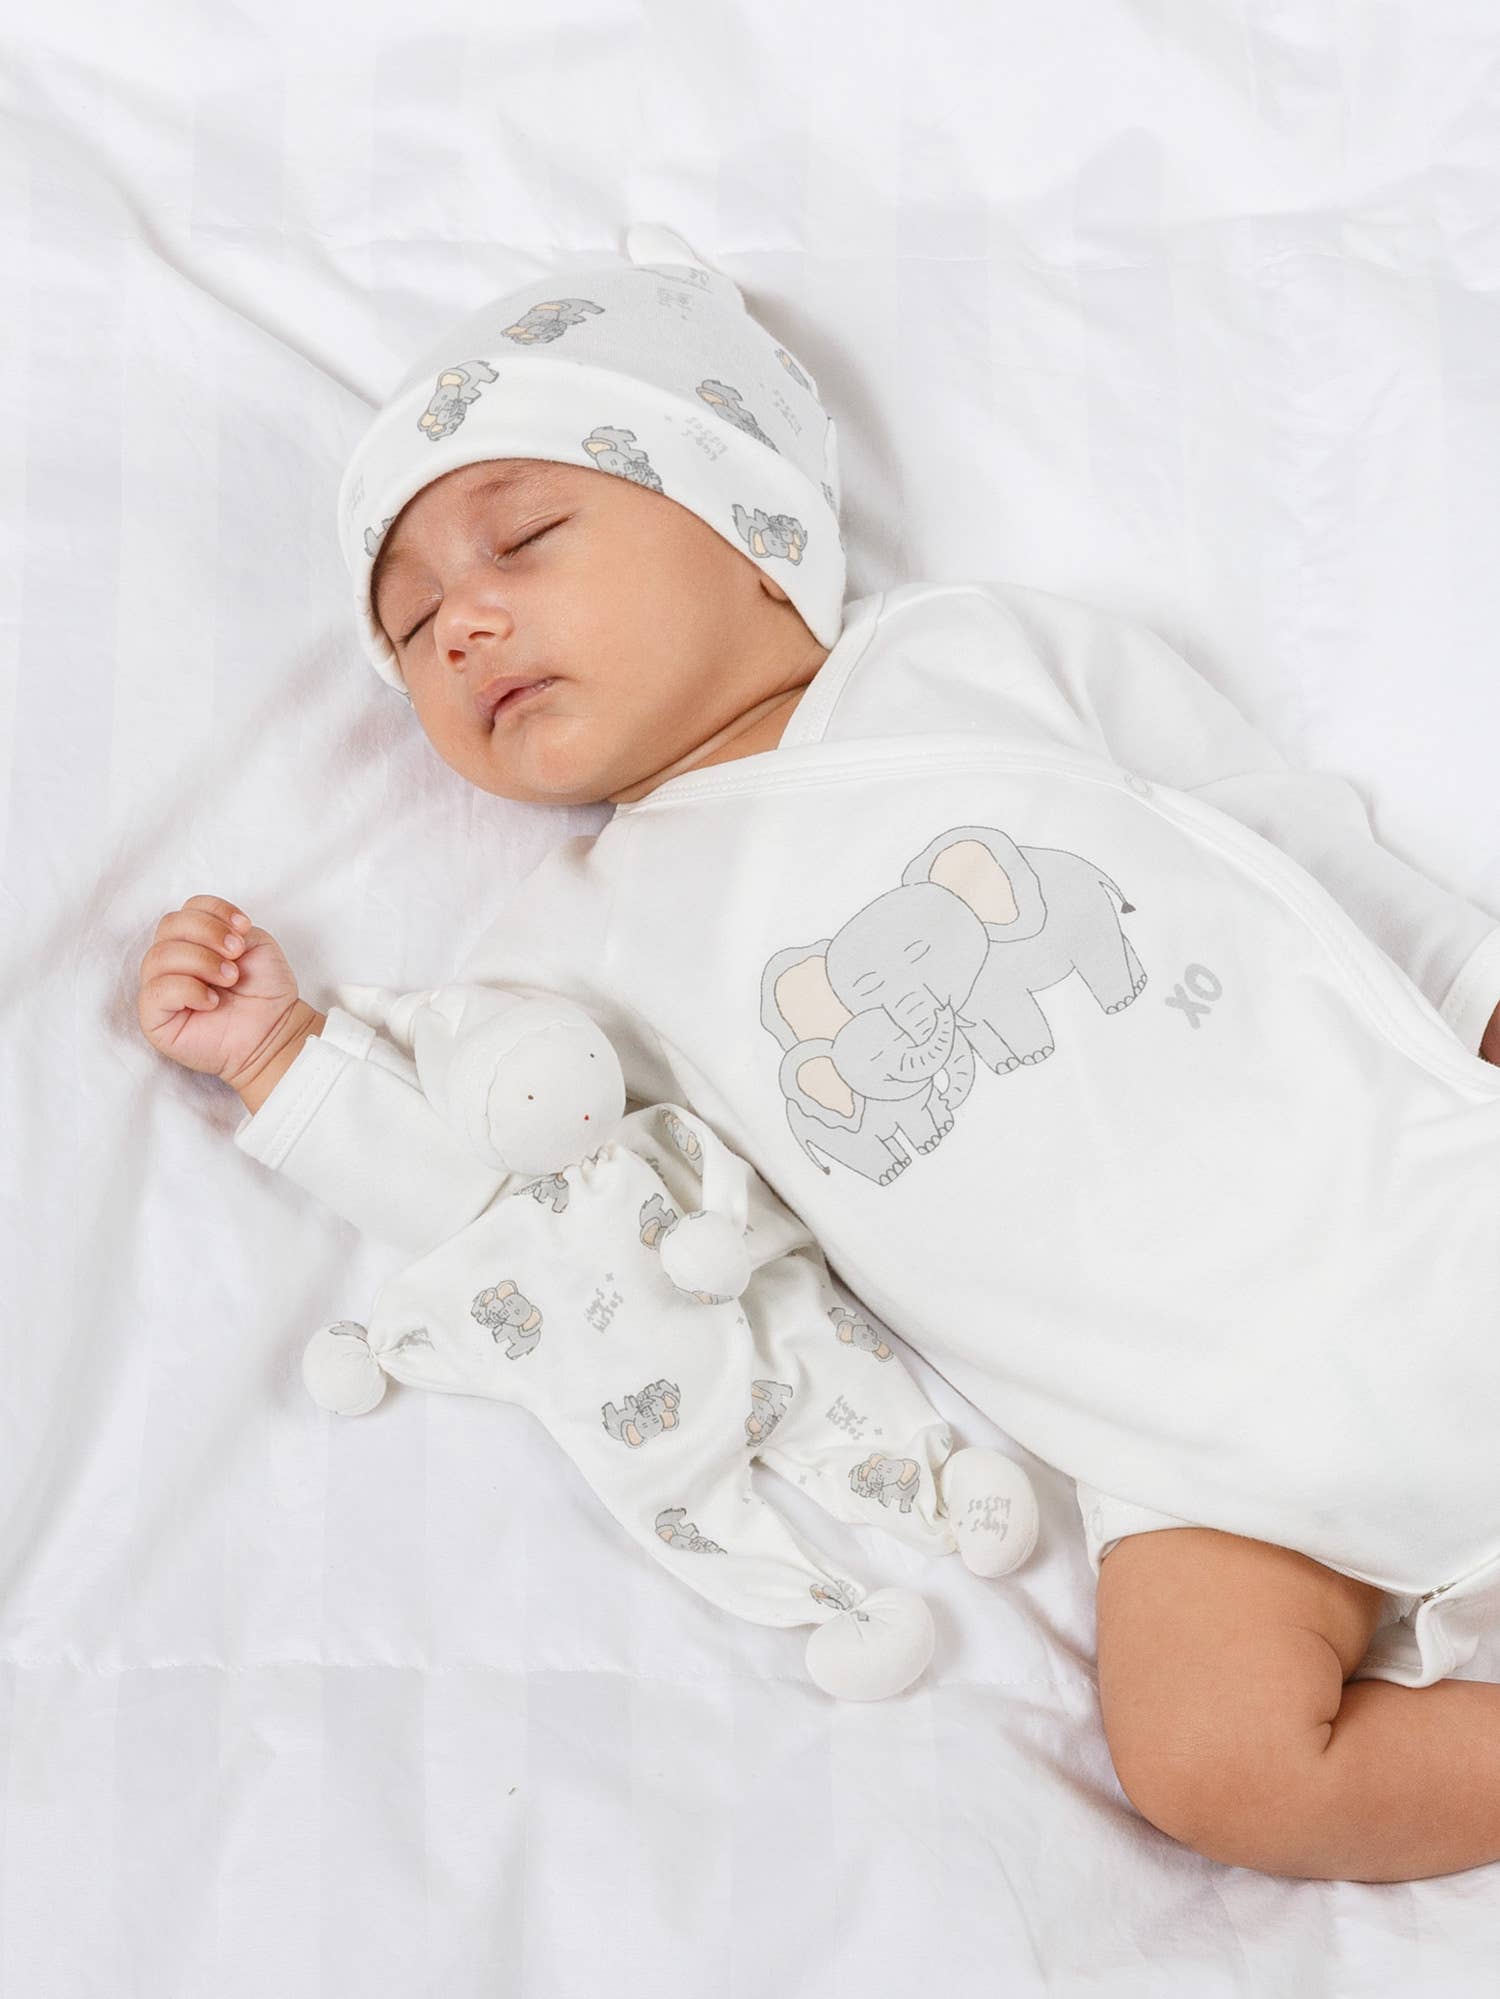 Under the Nile baby clothes bodysuit - elephant / 0-3 month Organic LS Side Snap Bodysuit - Elephant